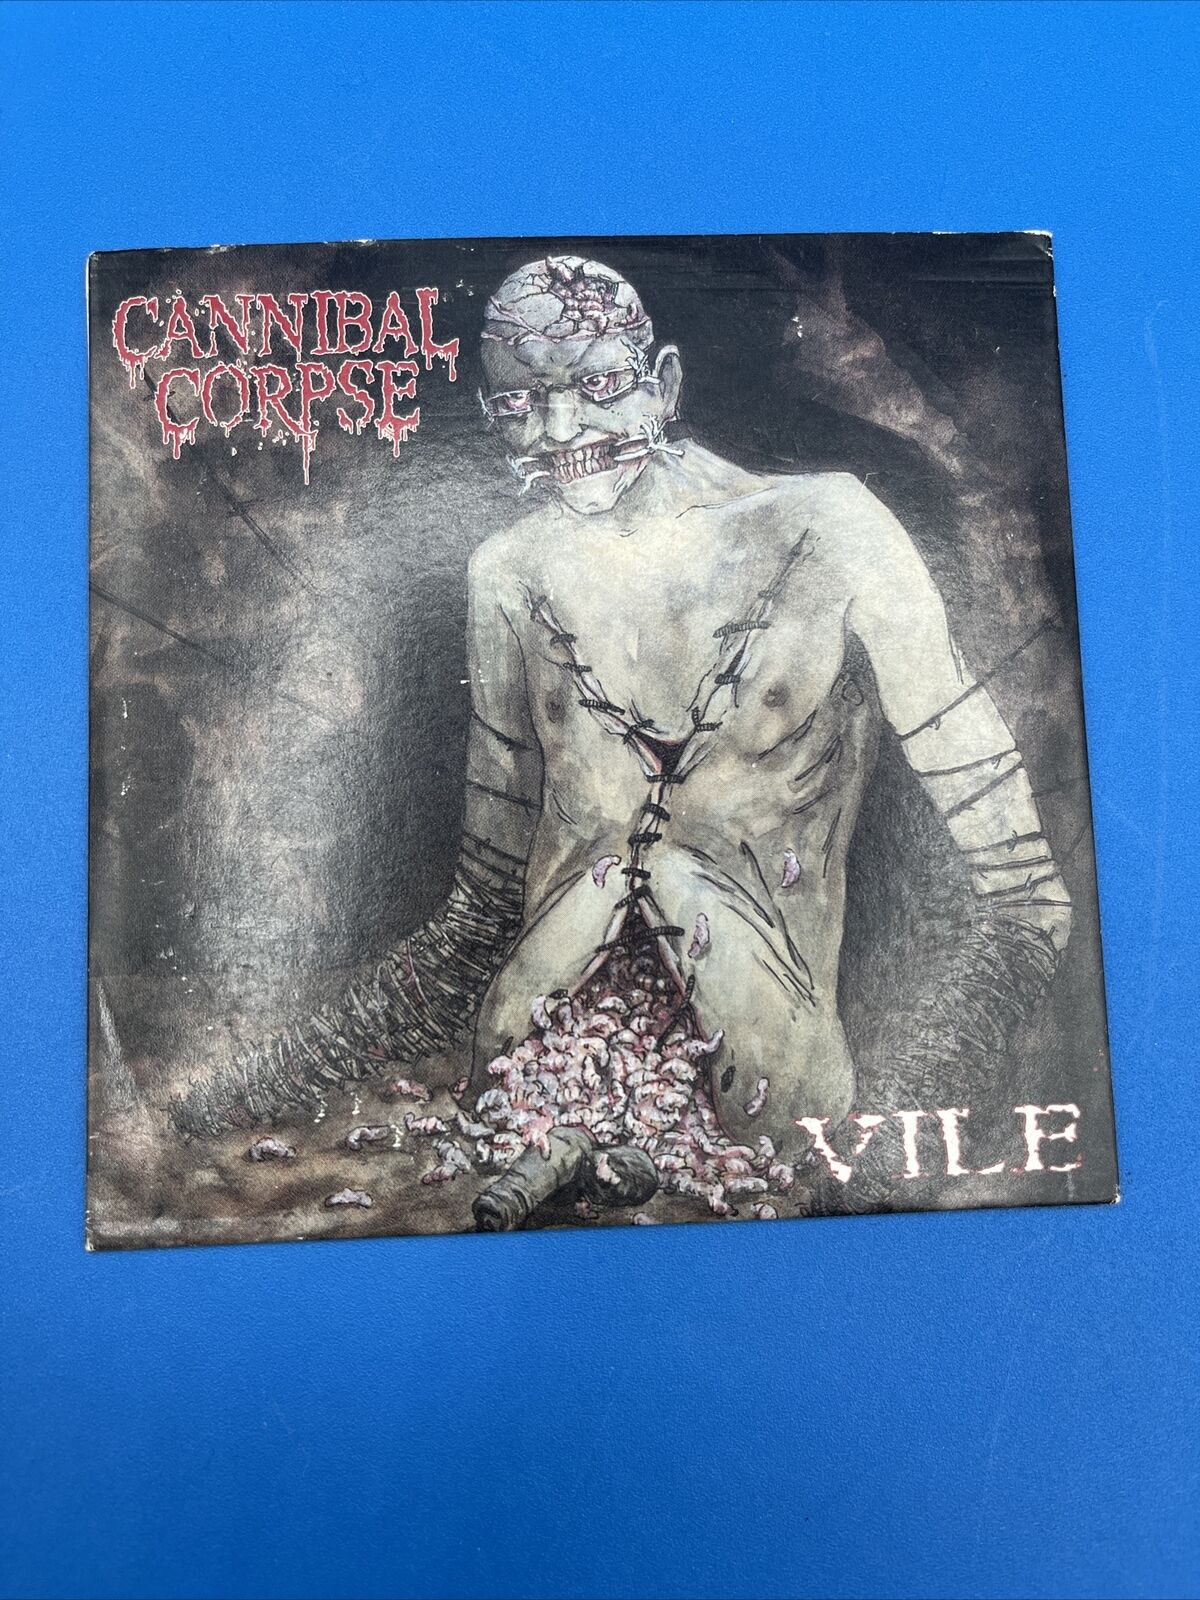 Cannibal Corpse Vile Promo CD 1996 vintage Rare